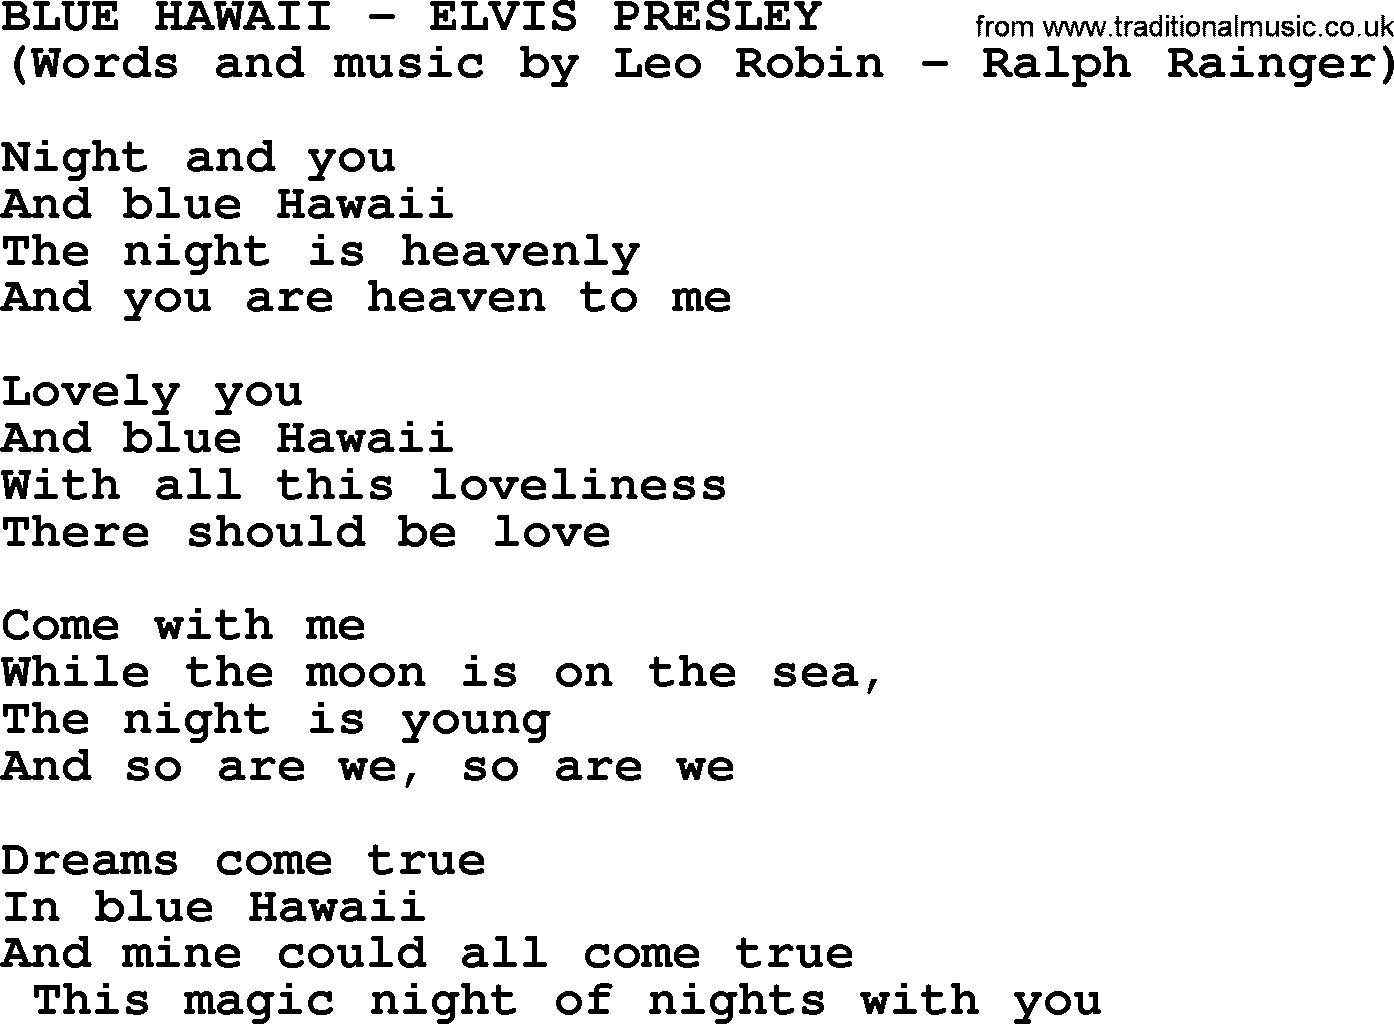 Elvis Presley song: Blue Hawaii lyrics